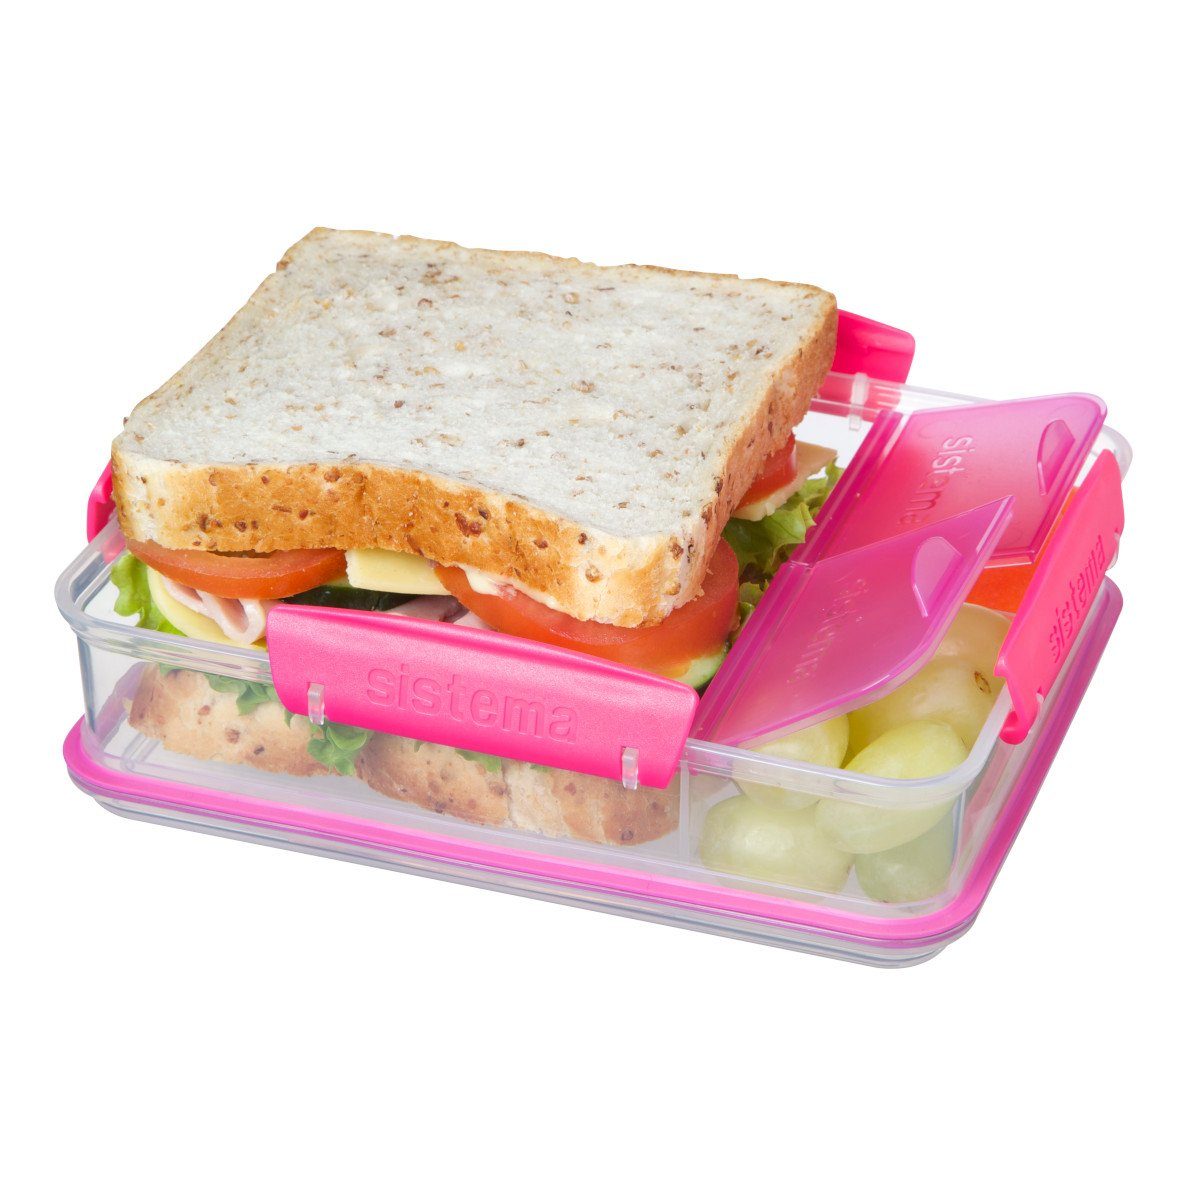 Brotdose Lunch Box Frühstücks Dose Brot Sandwich L.O.L Surprise 3 fächer LOL 